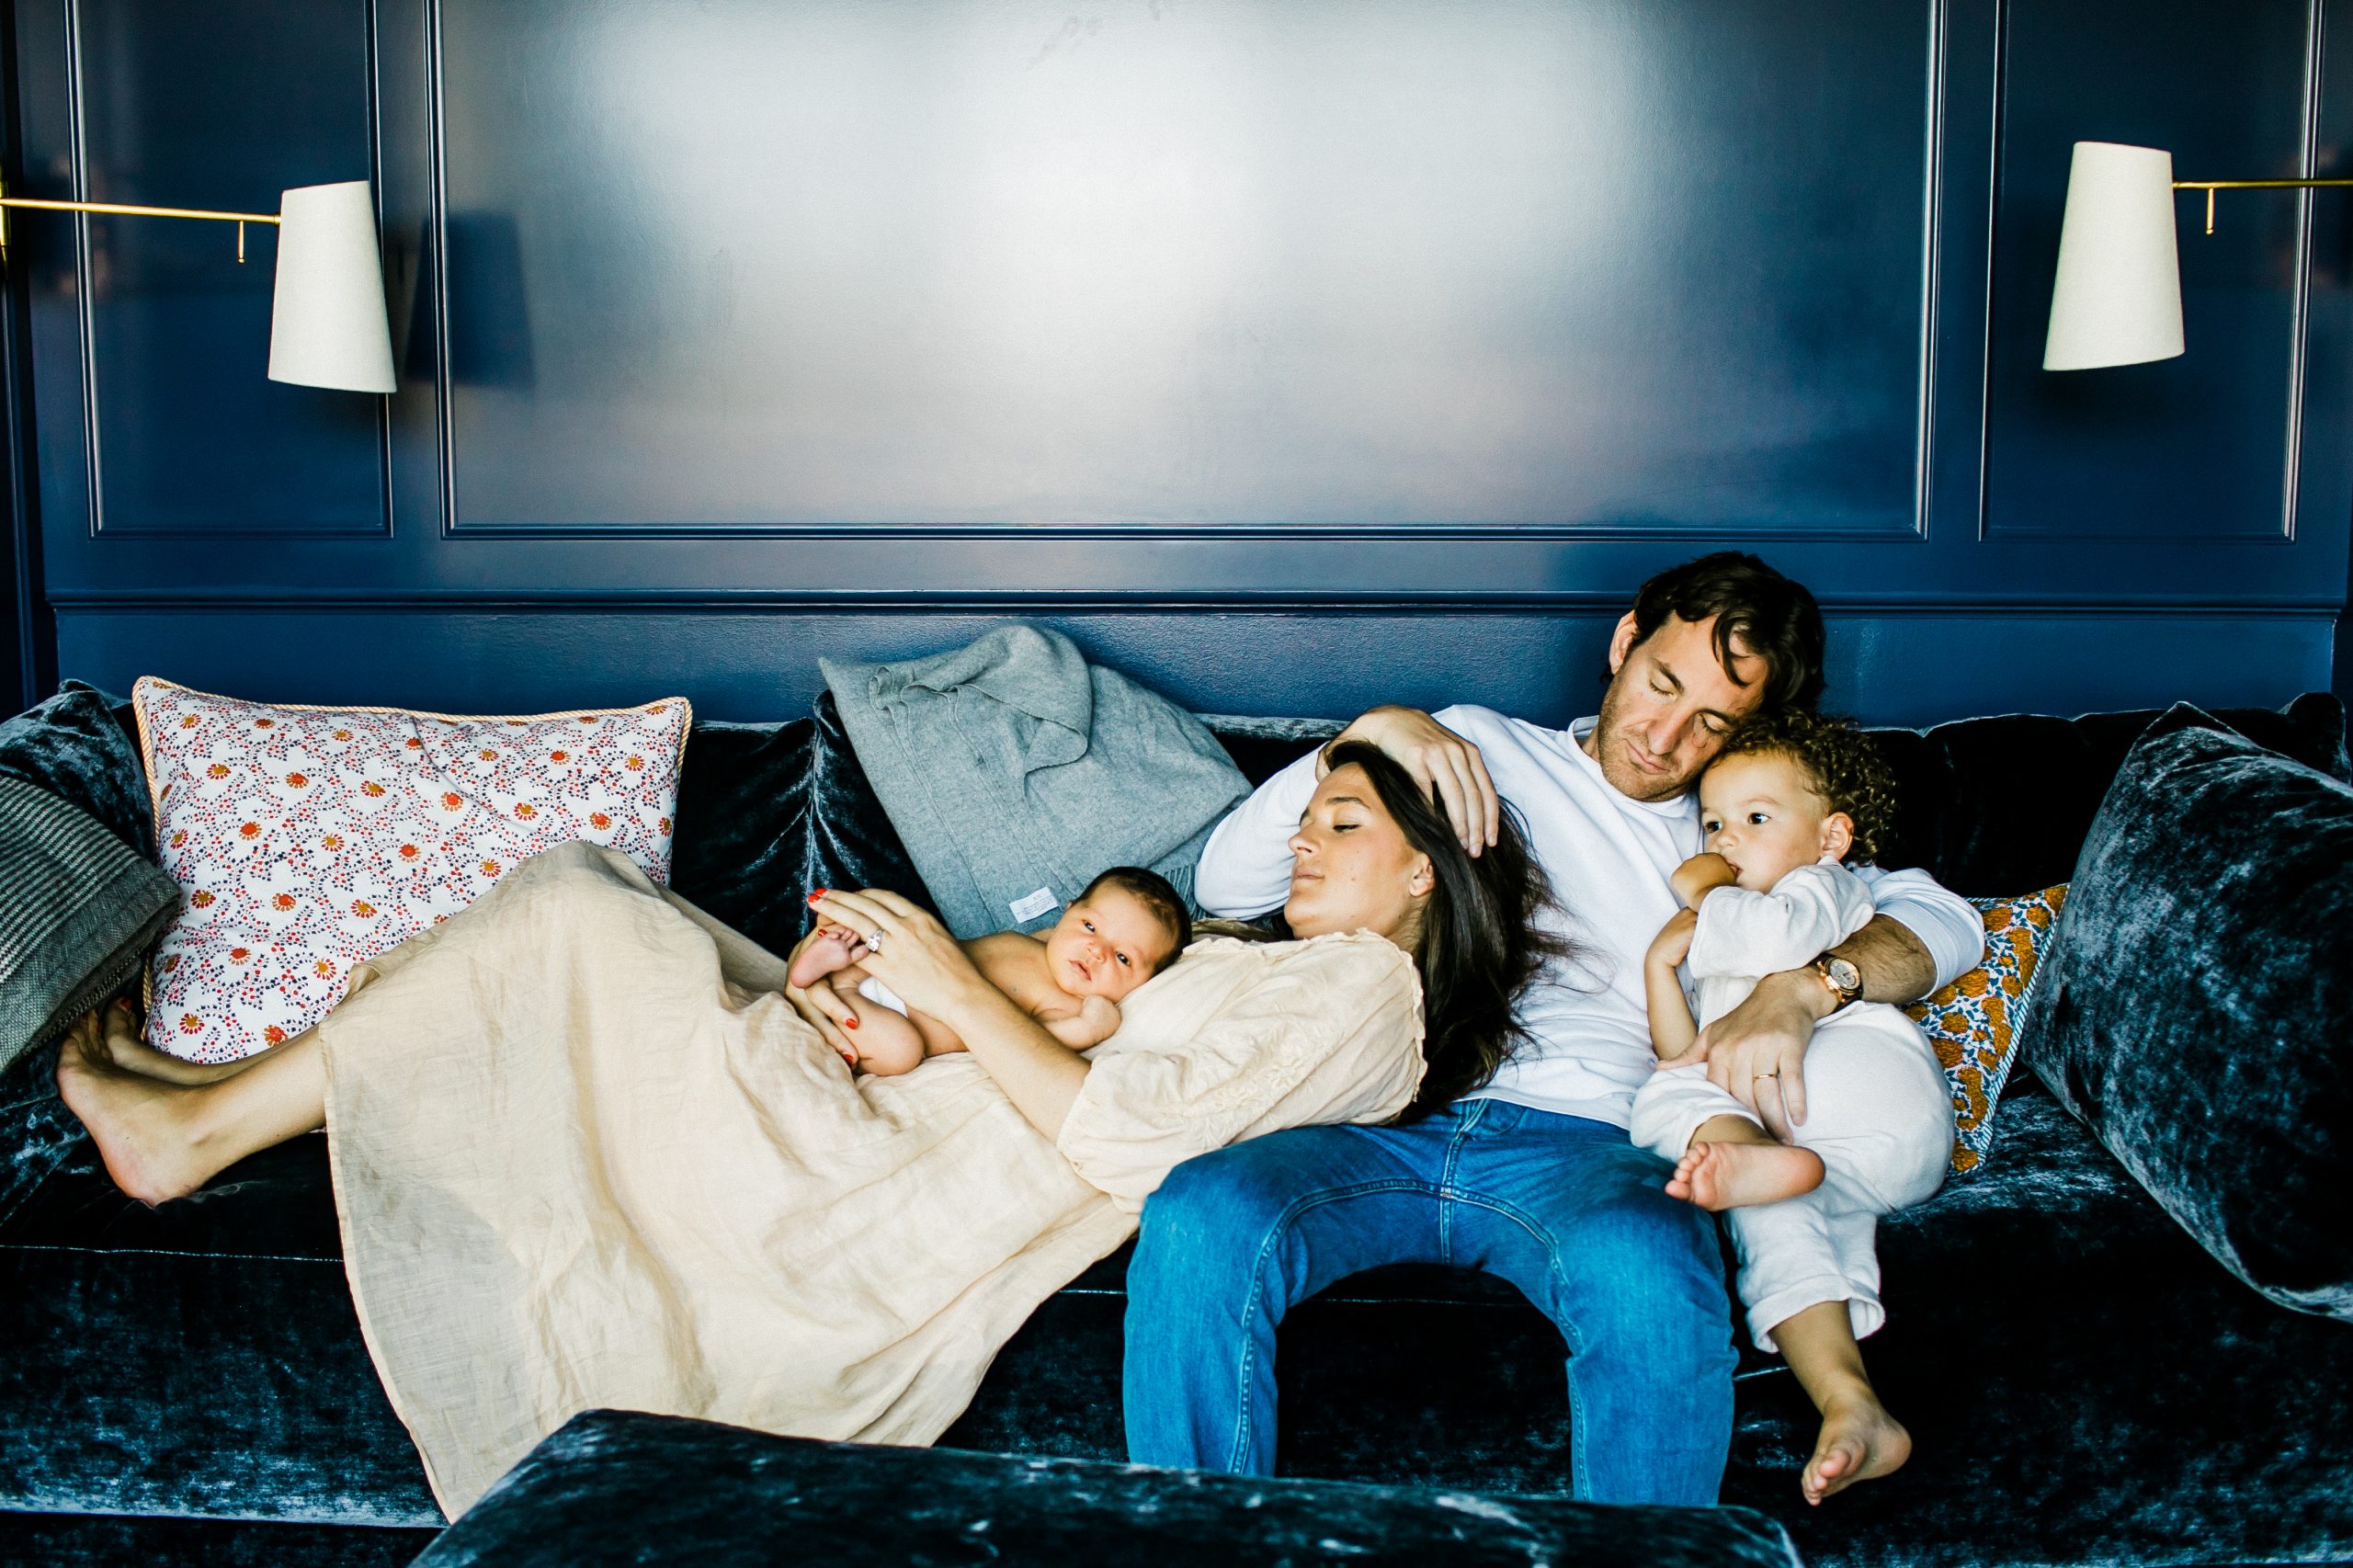 sleepy colorado family rests in blue room